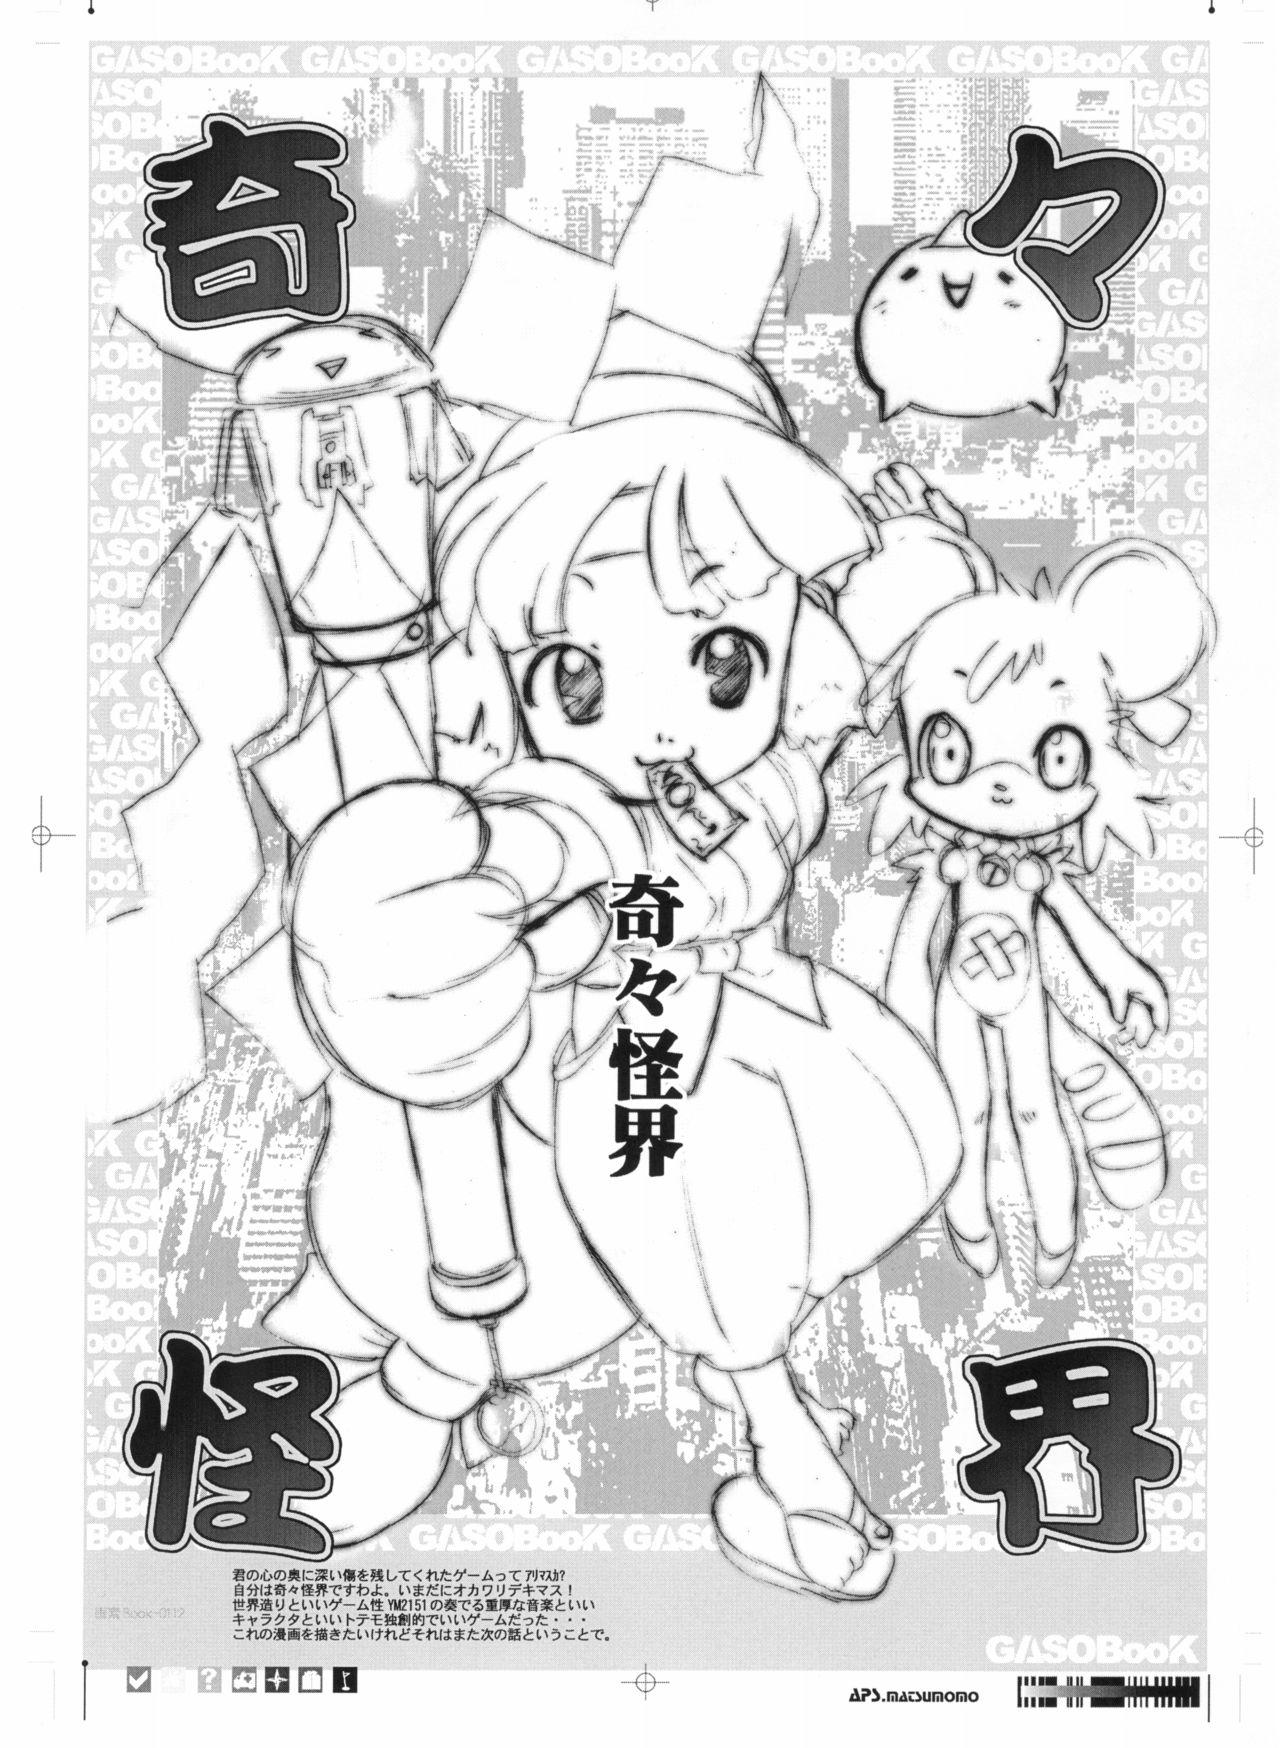 GASOBooK Genkou Youshi Kidz AnimeTronica -0112 26